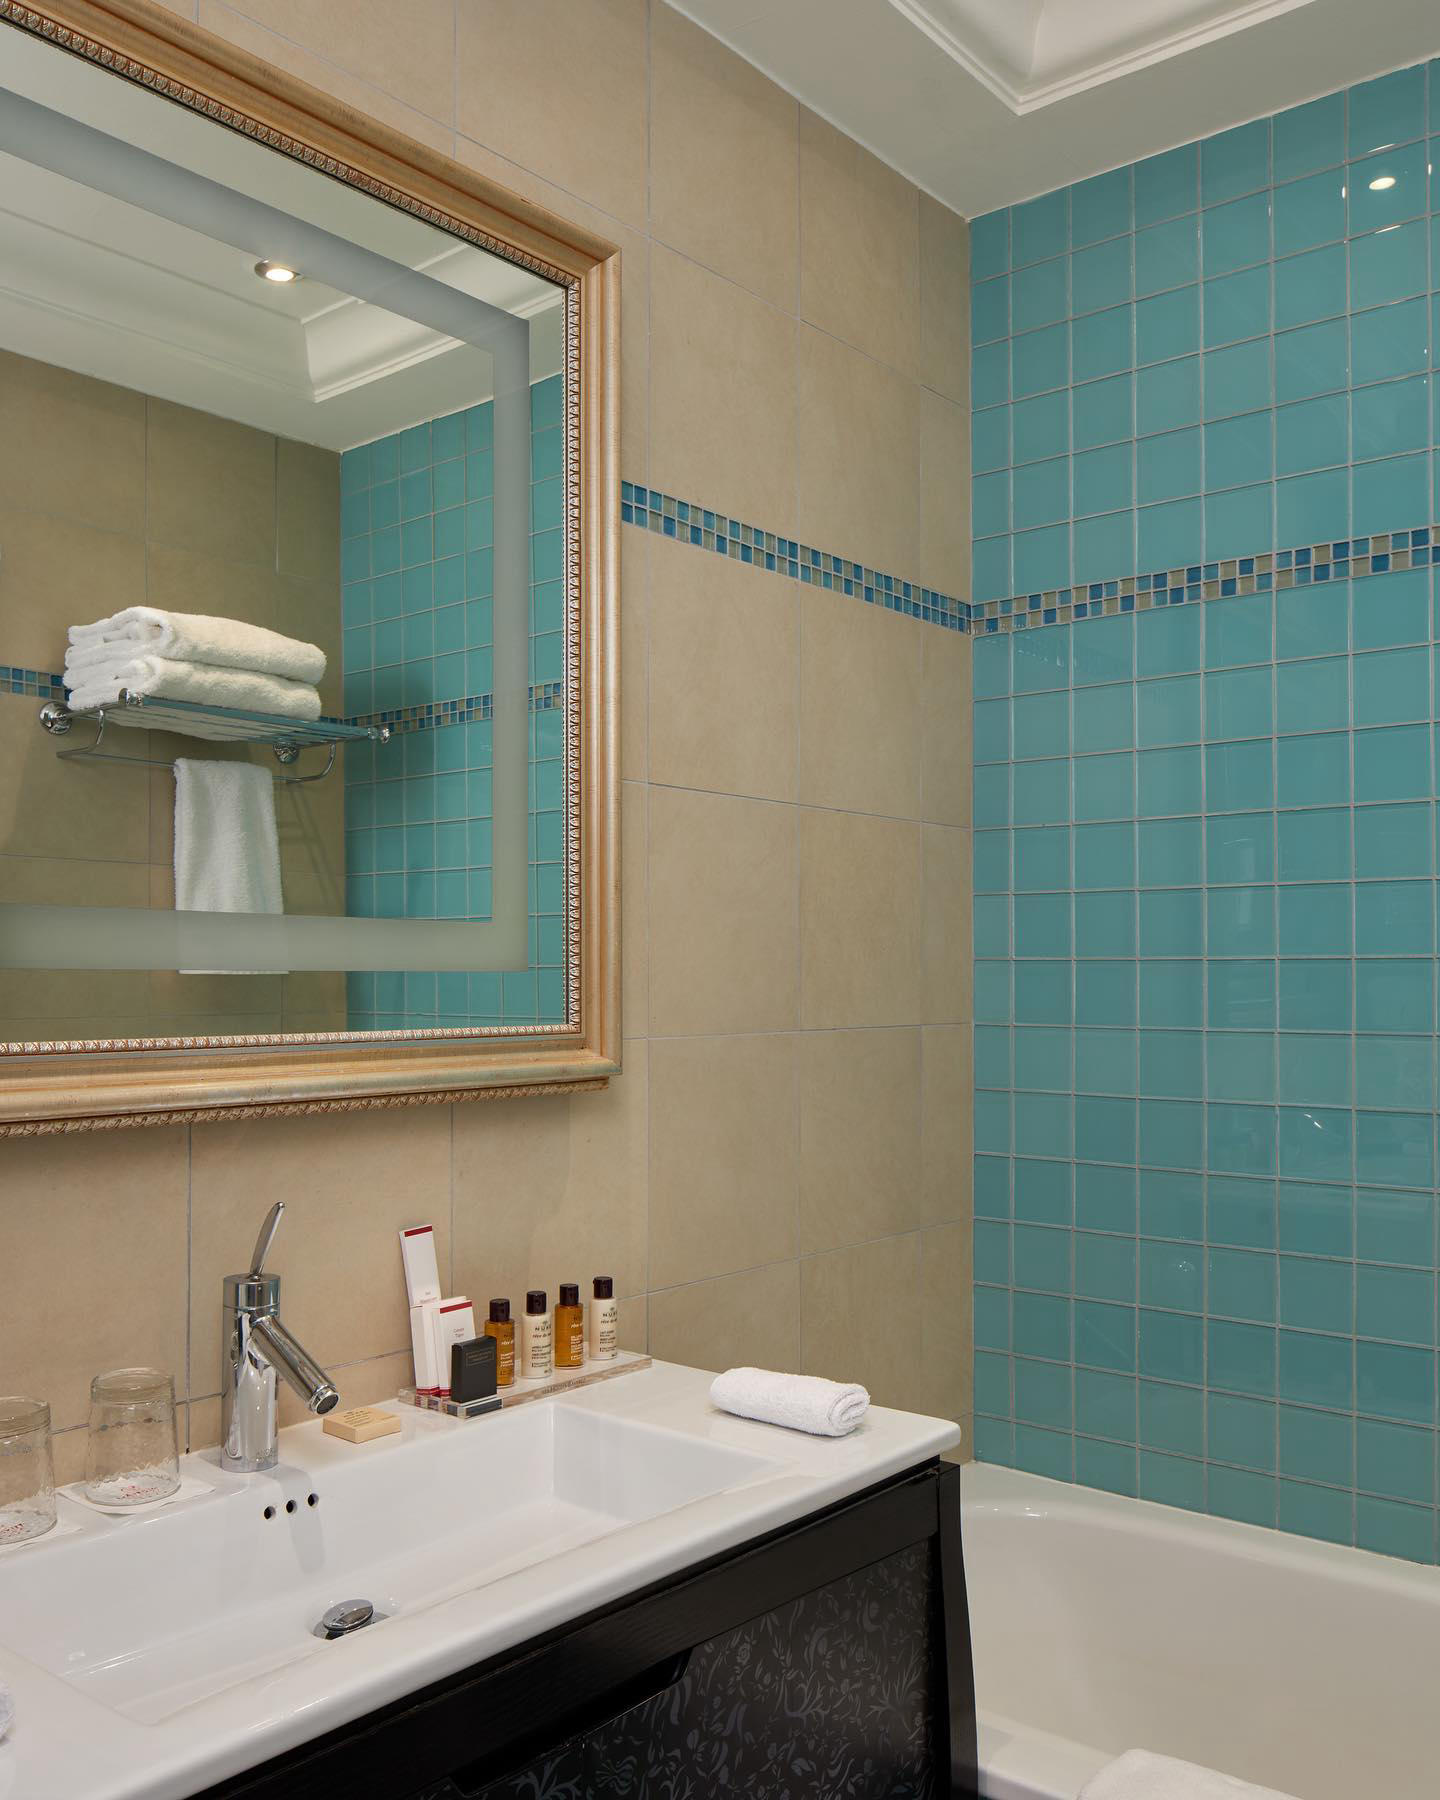 image  1 Majestic Hôtel-Spa Paris - [Bathroom] – Overview of the bathroom in room 207•[Salle de bain] - Aperç